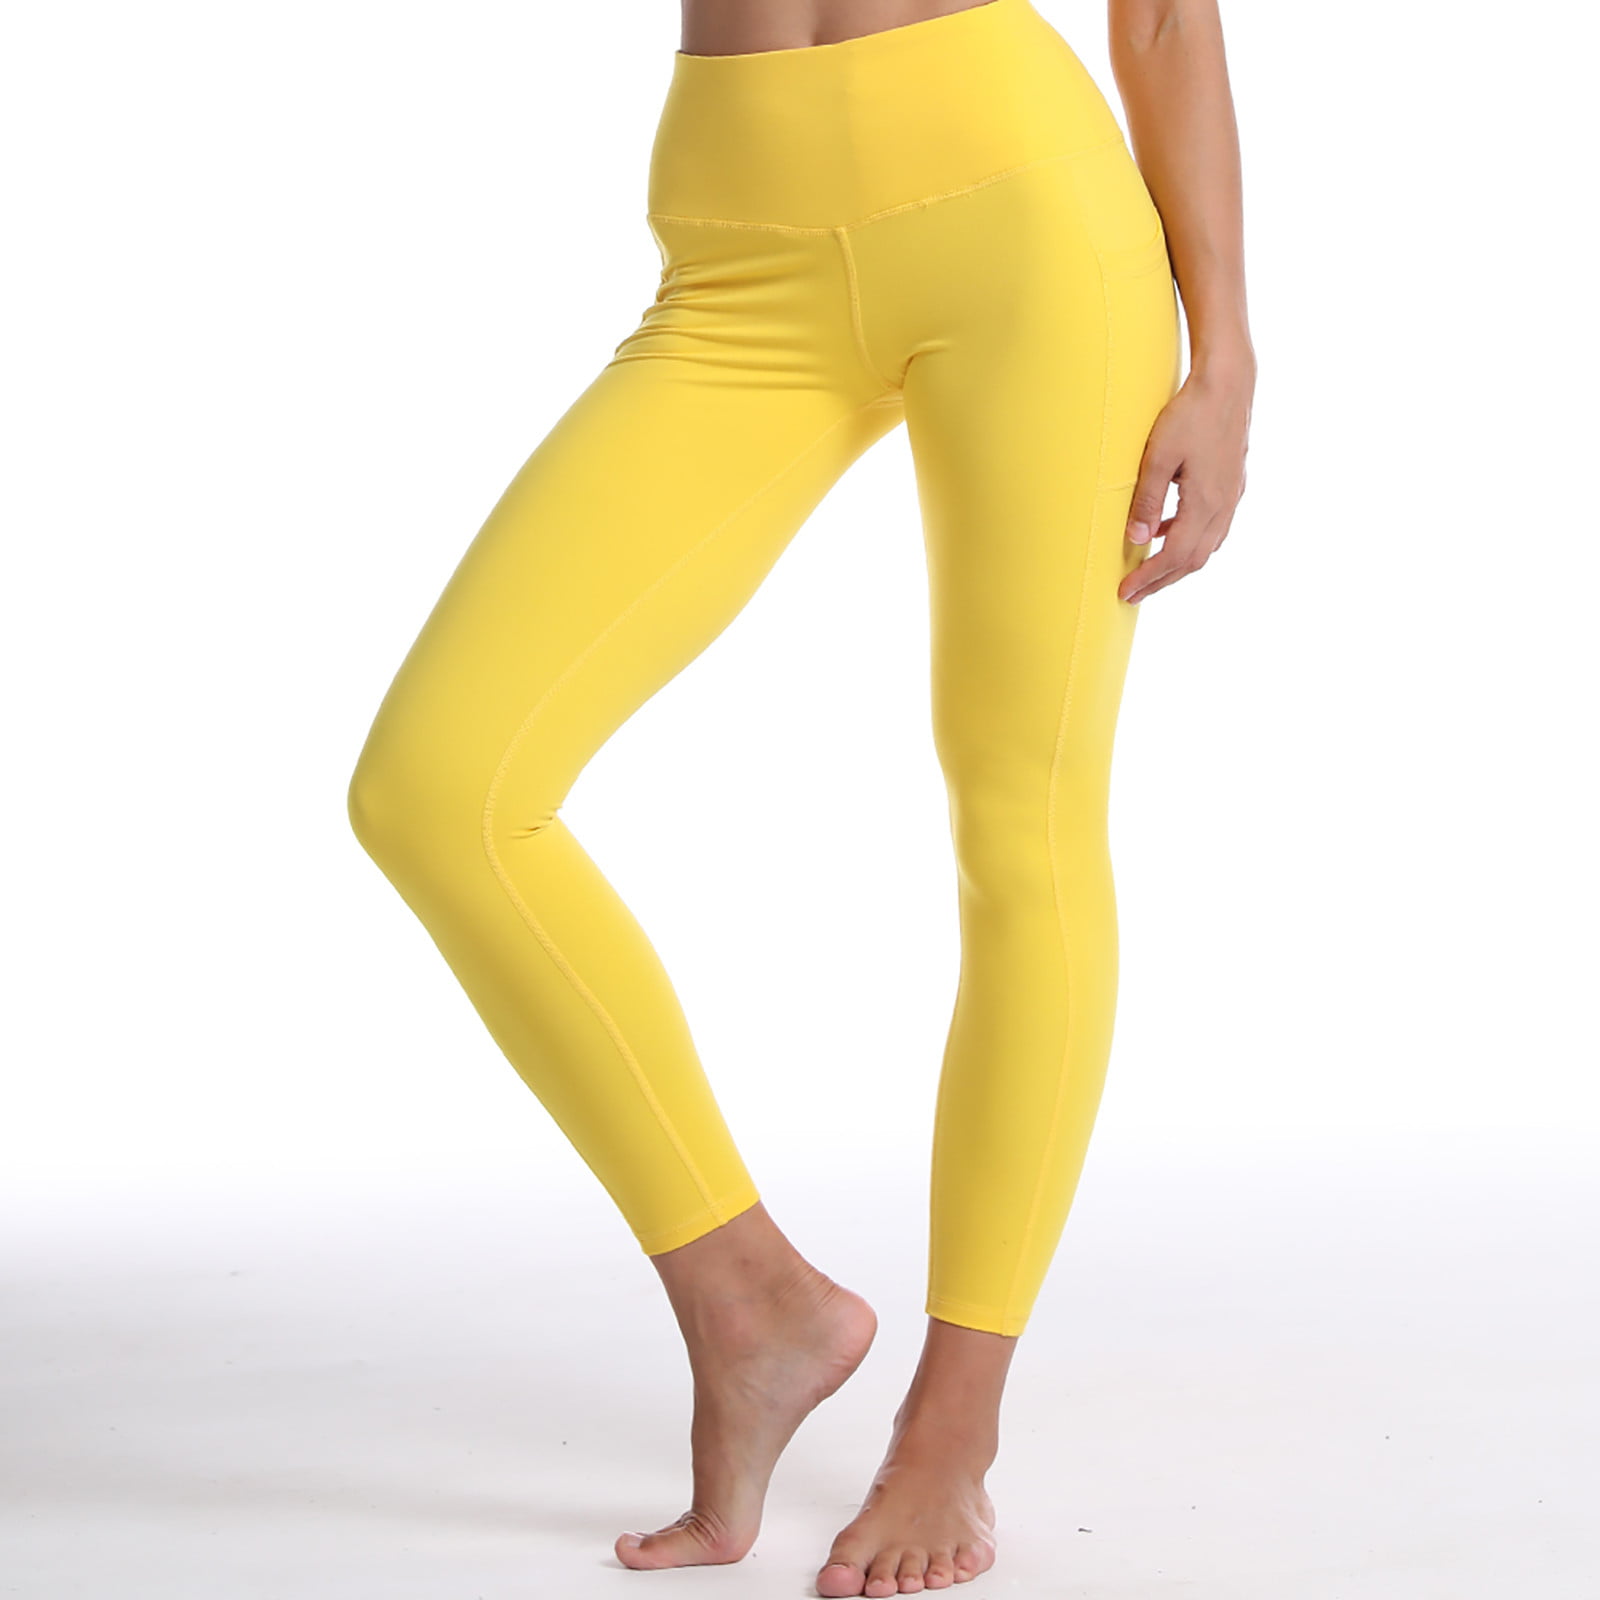 FYMIJJ leggings,Fitness Female Full Length Leggings 11 Colors Running Pants  Formfitting Girls Yoga Pants Sports Pants,the leaves yellow,L :  : Fashion